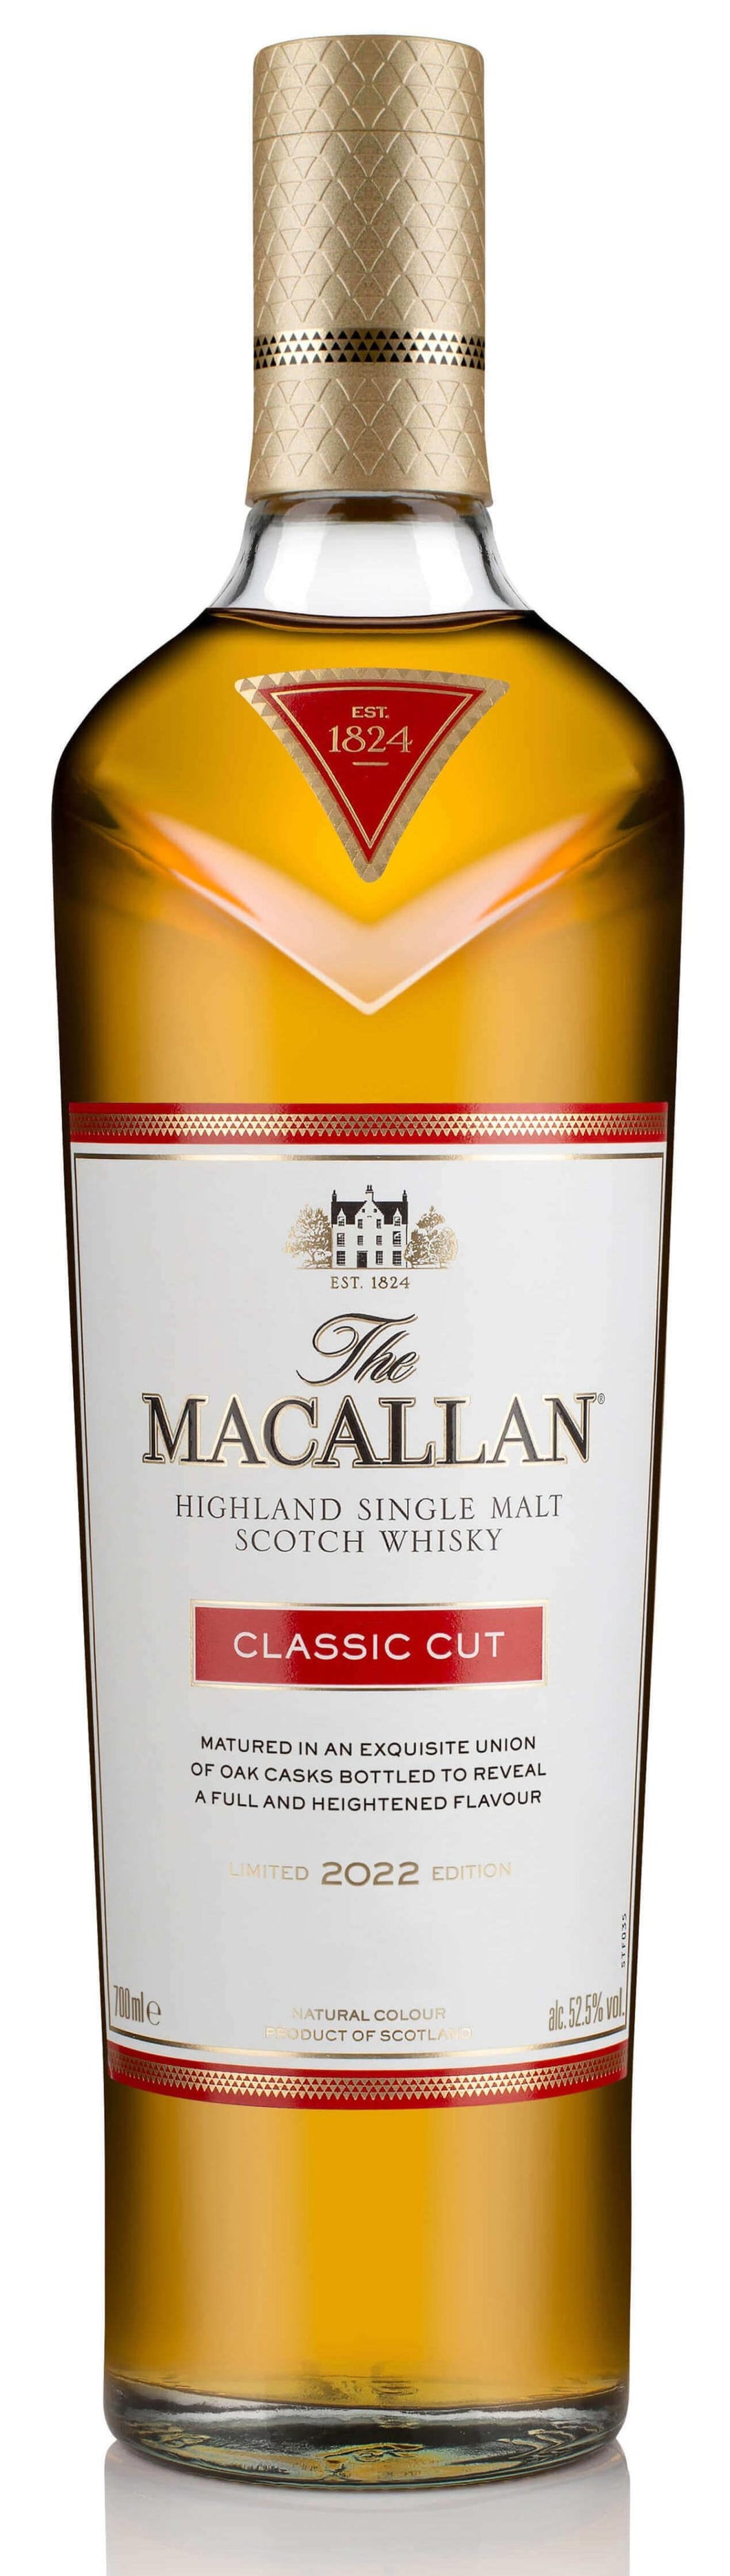 The Macallan Classic Cut - 2022 Edition